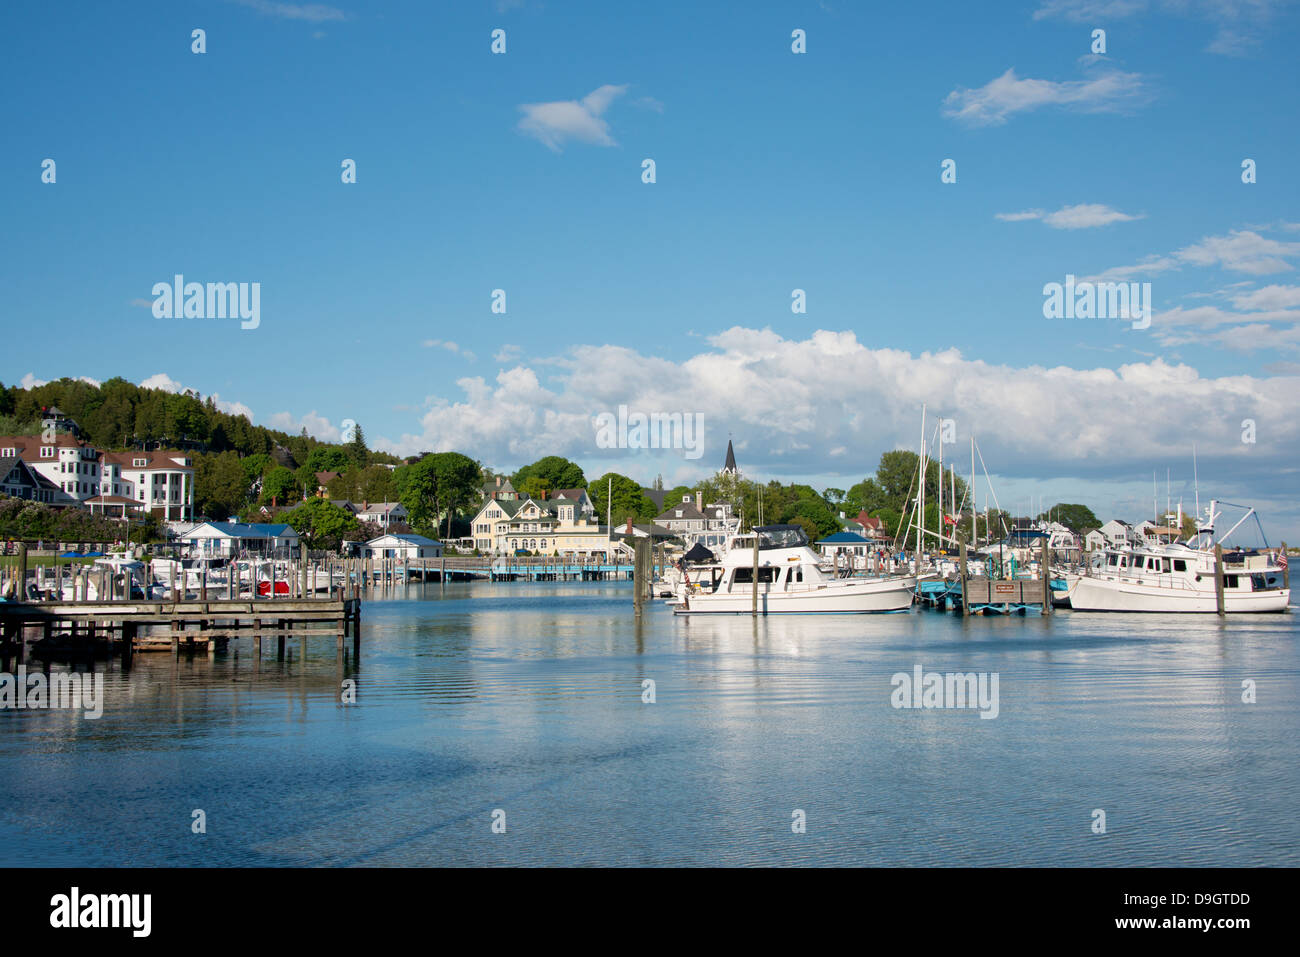 Michigan, Lake Huron, Mackinac Island. Port and marina area of downtown Mackinac and Haldimand Bay. Stock Photo